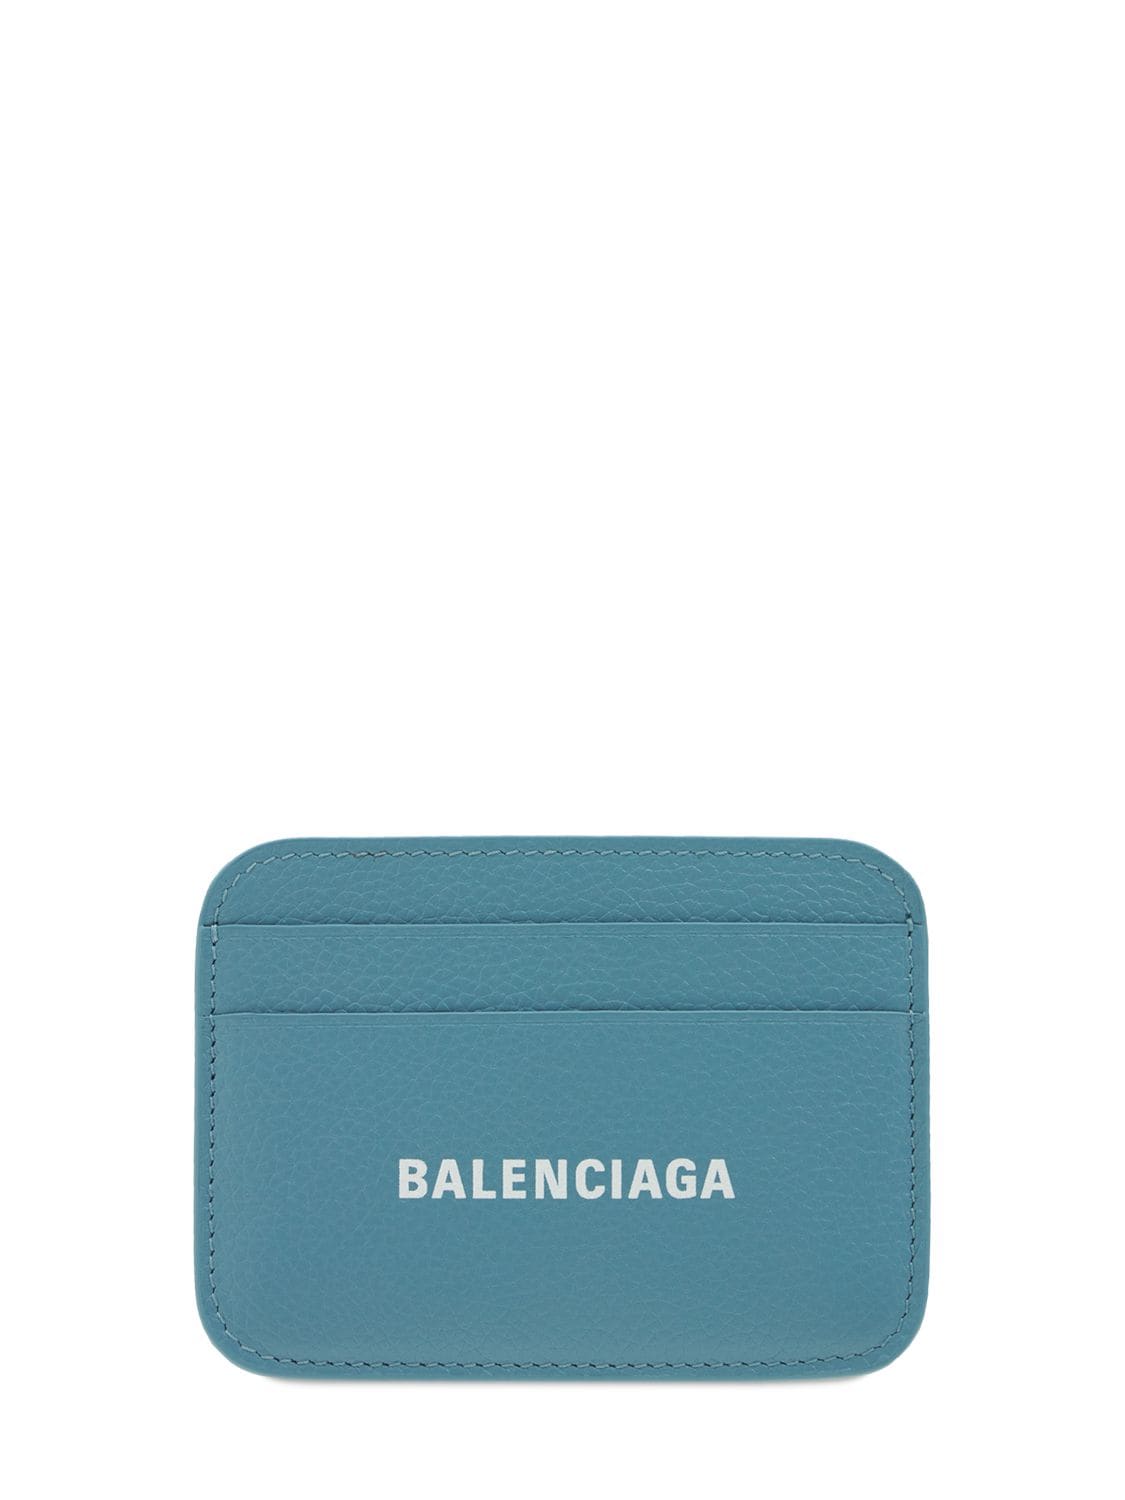 Balenciaga Leather Card Holder In 蓝灰色